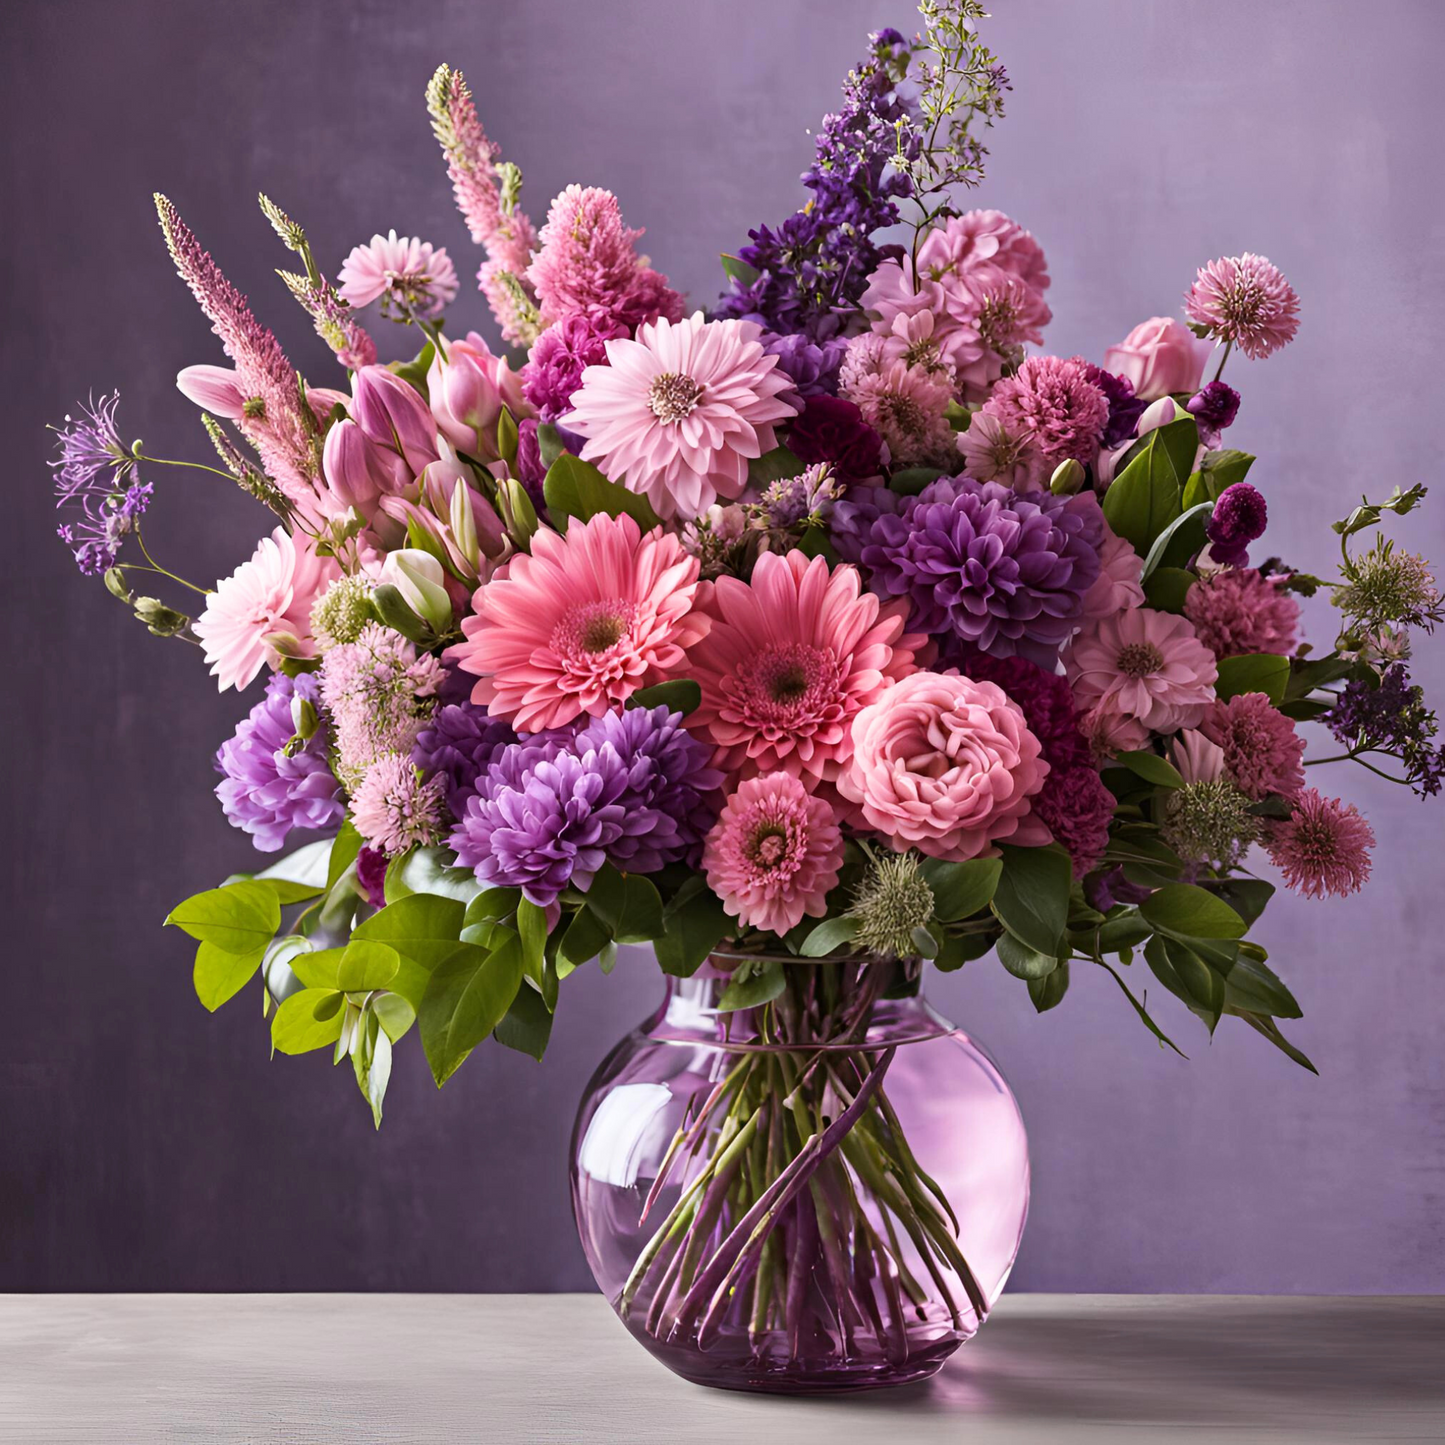 Birthday Flower Delivery - Tickled Pink and Purple Birthday Arrangement in Vase